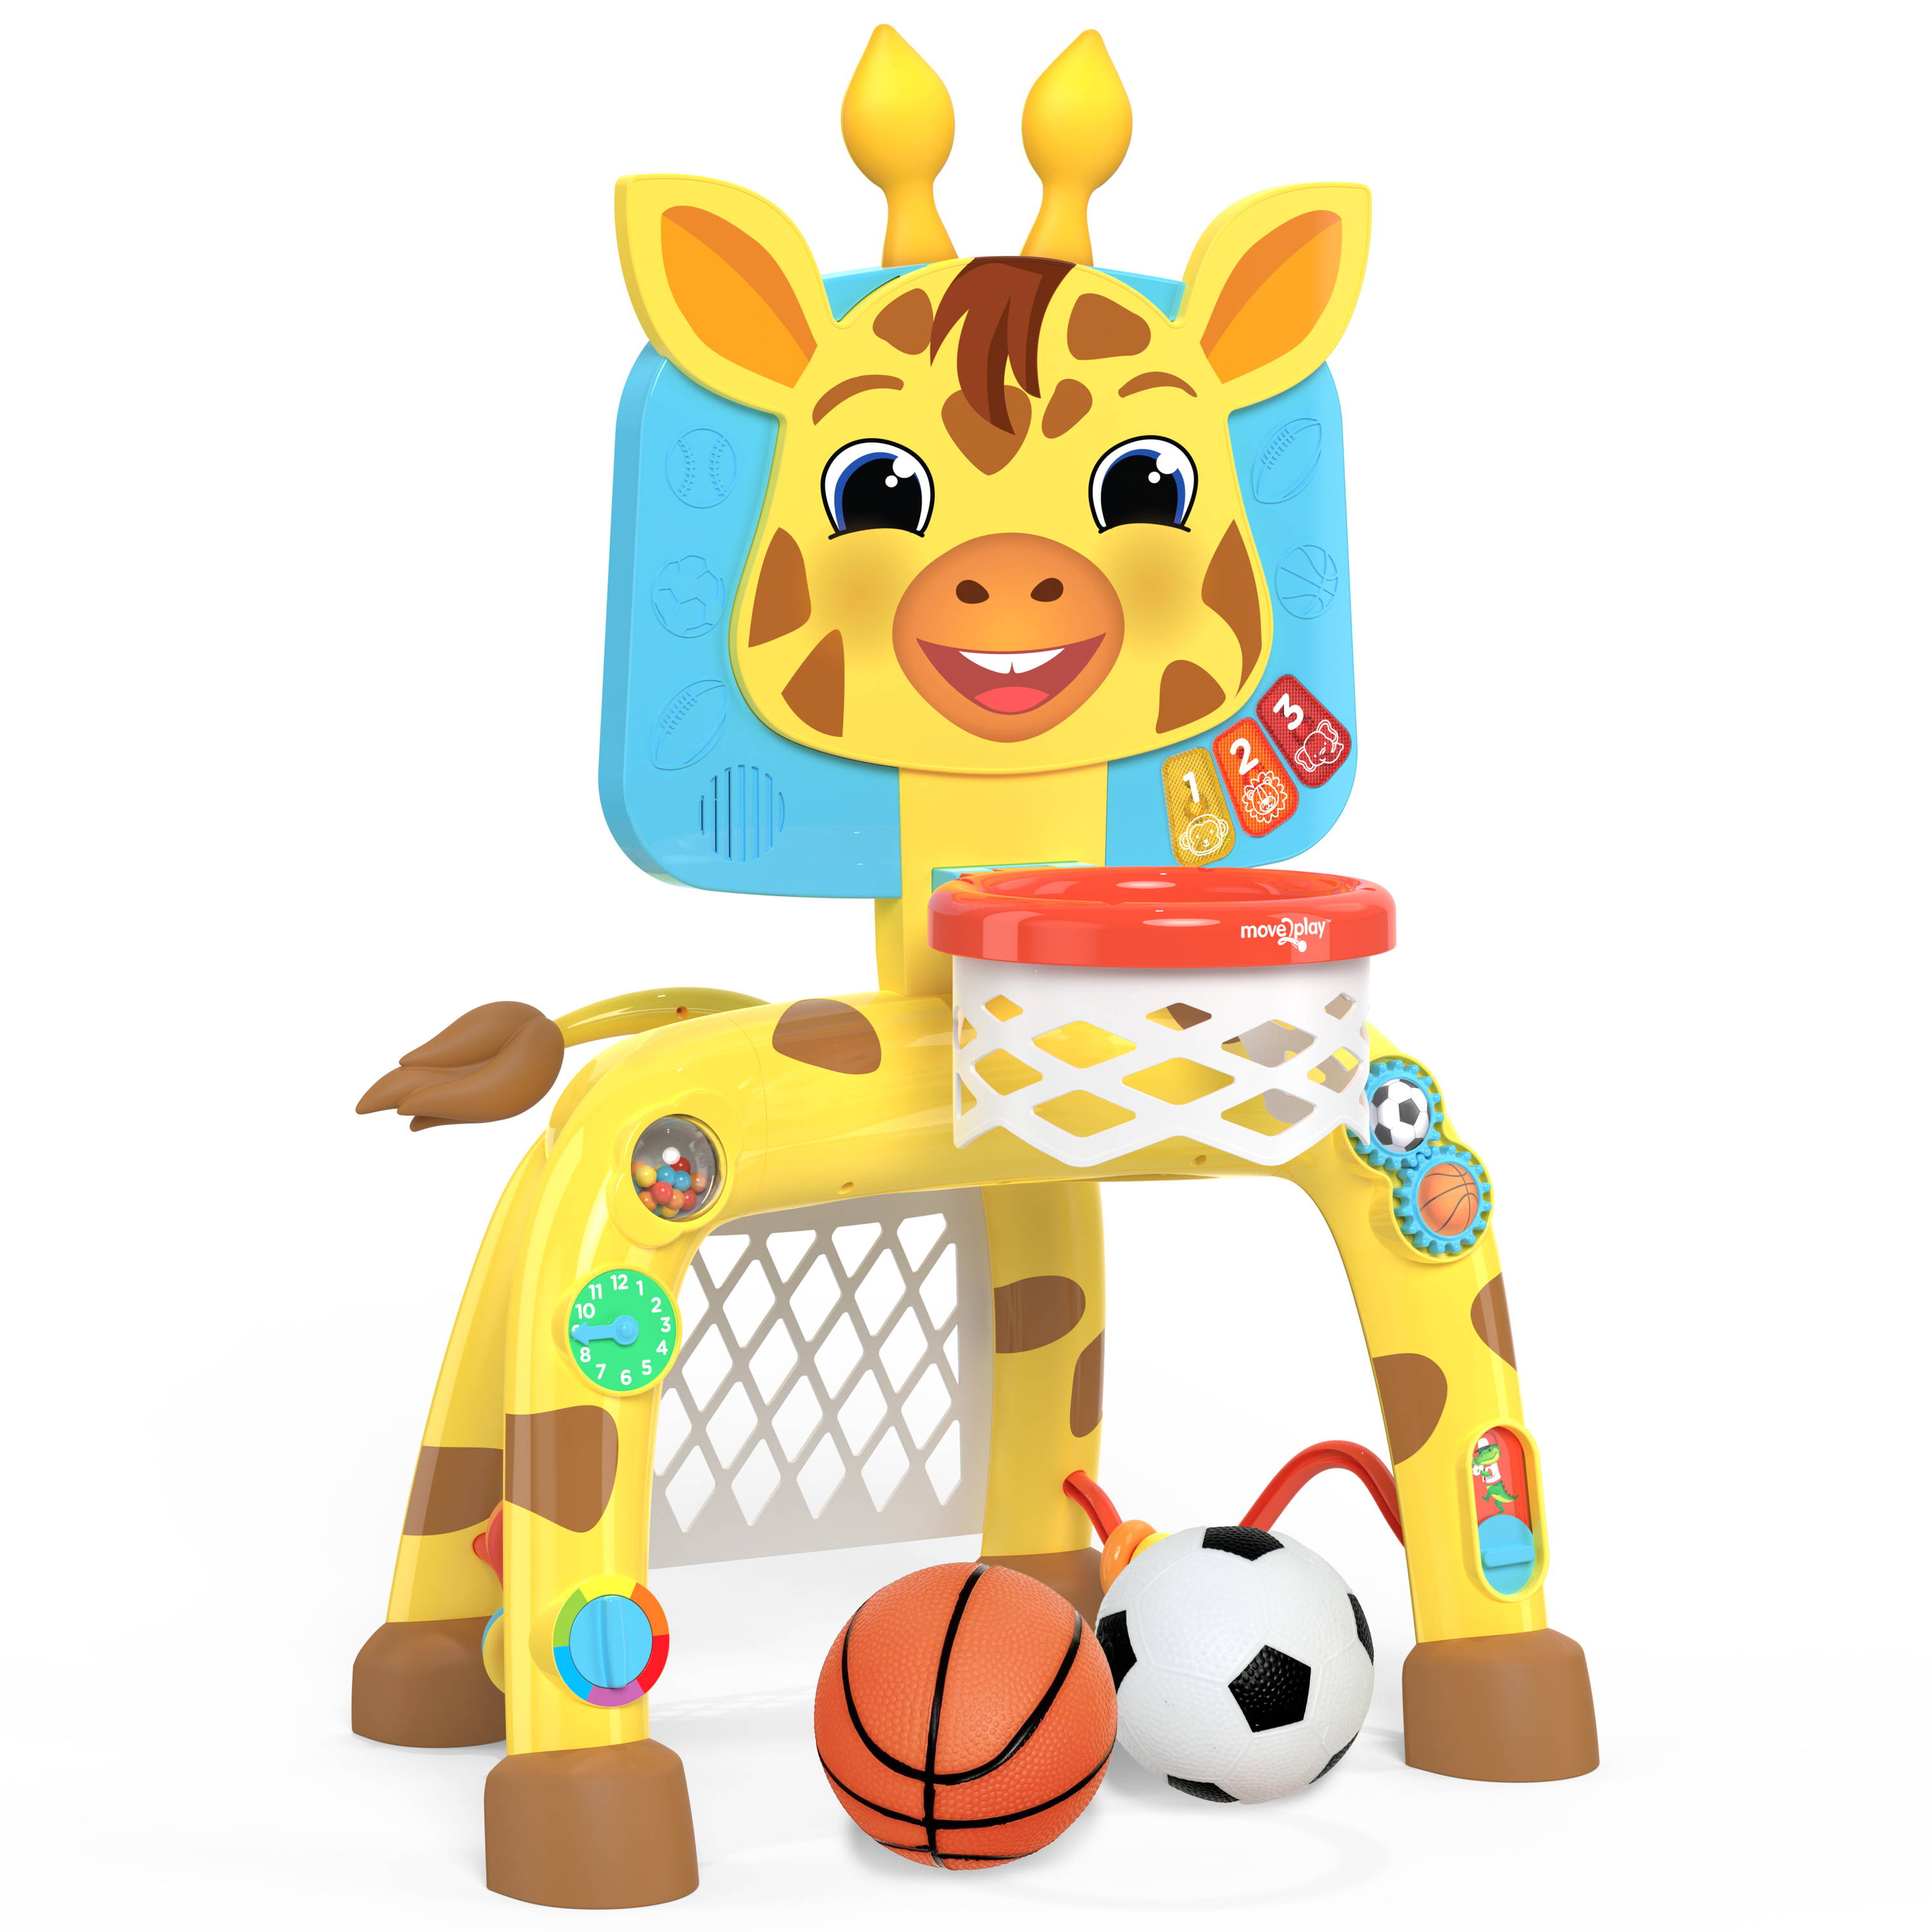 Giraffe Play & Score Activity Center – Move2Play